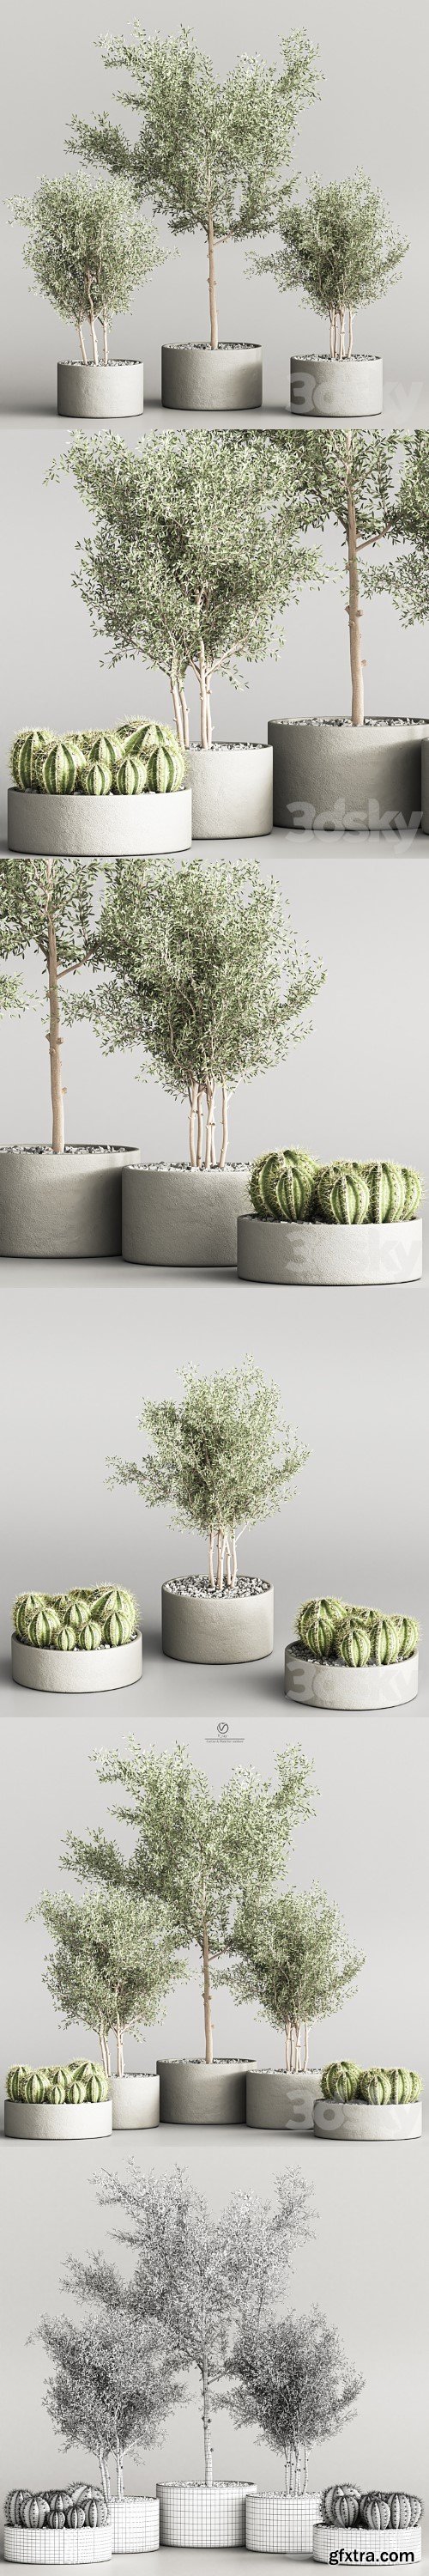 Cactus & Plant indoor vray